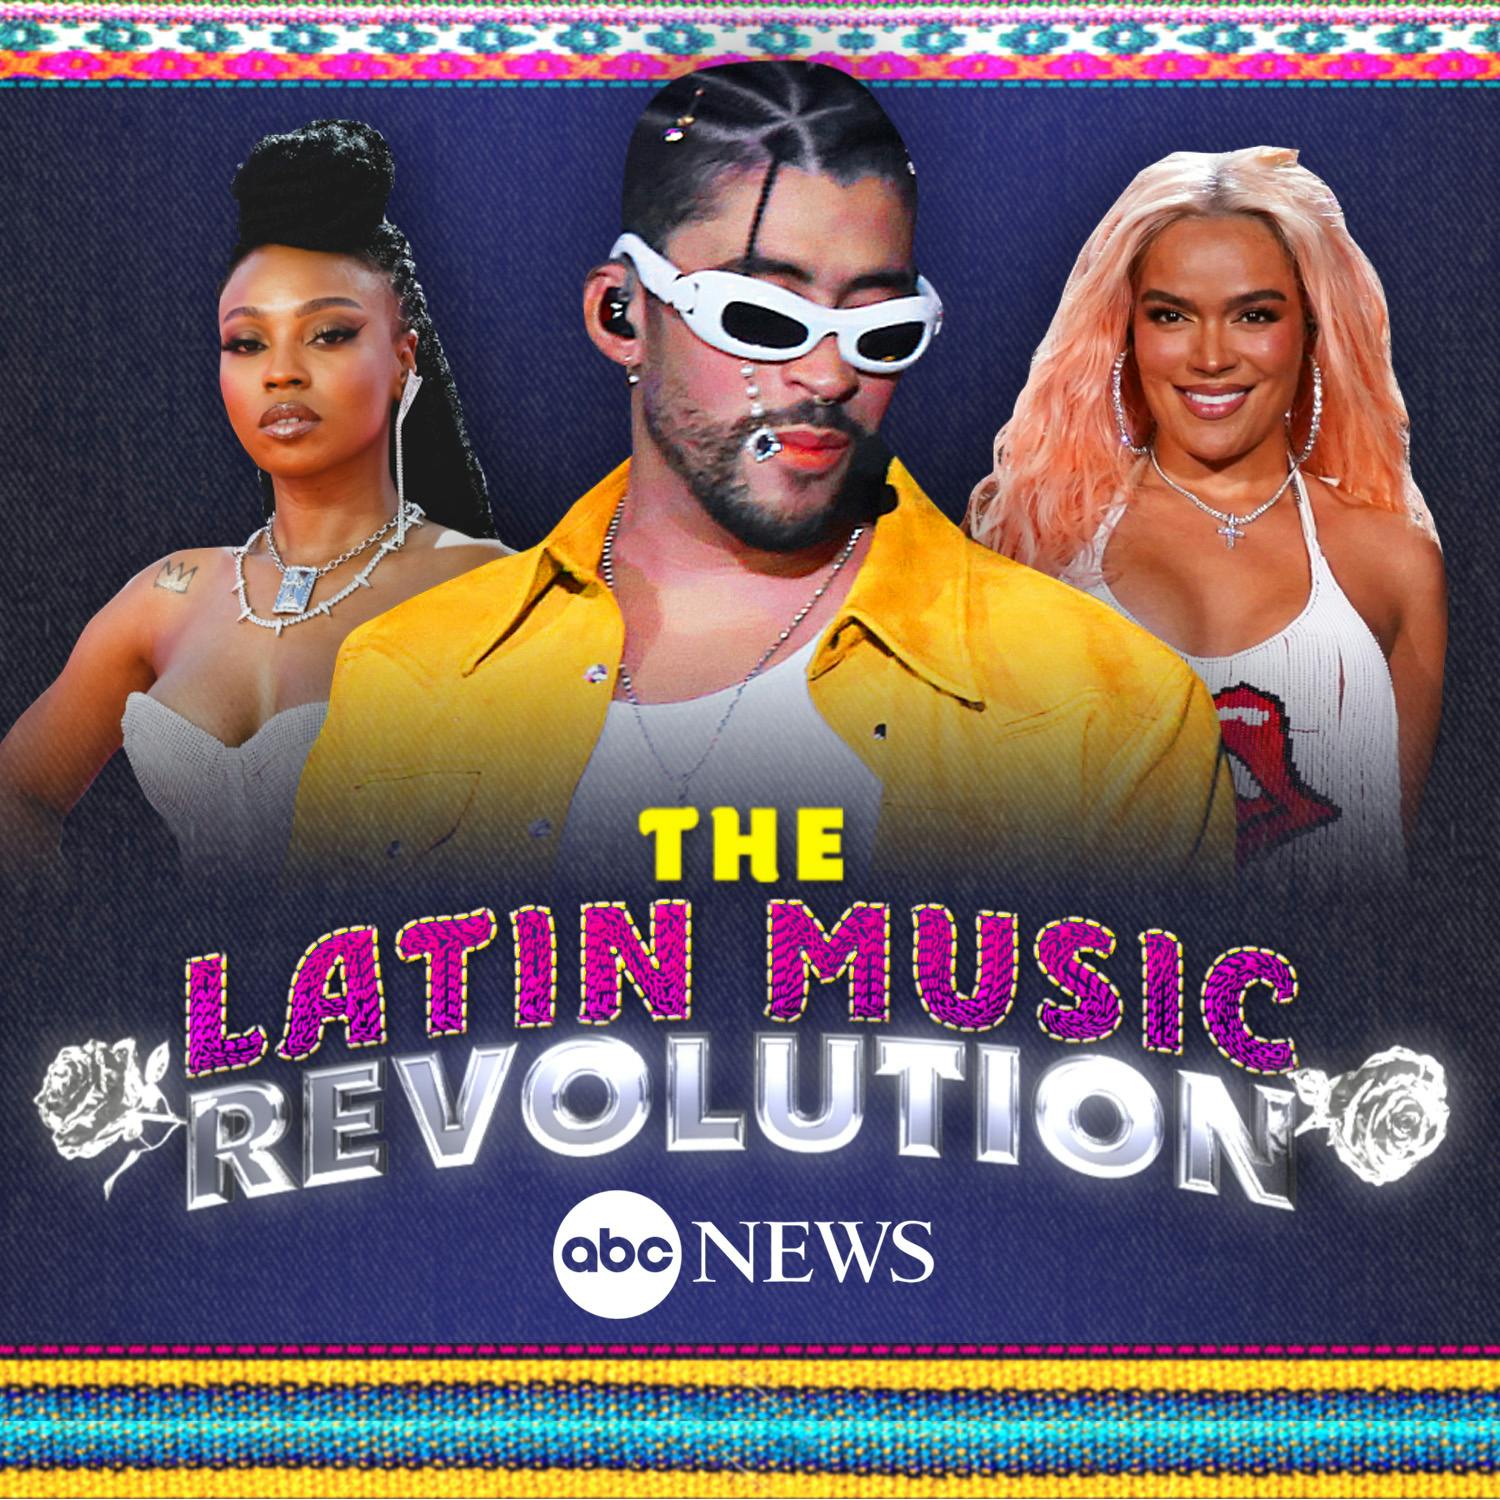 The Latin Music Revolution: A Soul of a Nation Presentation